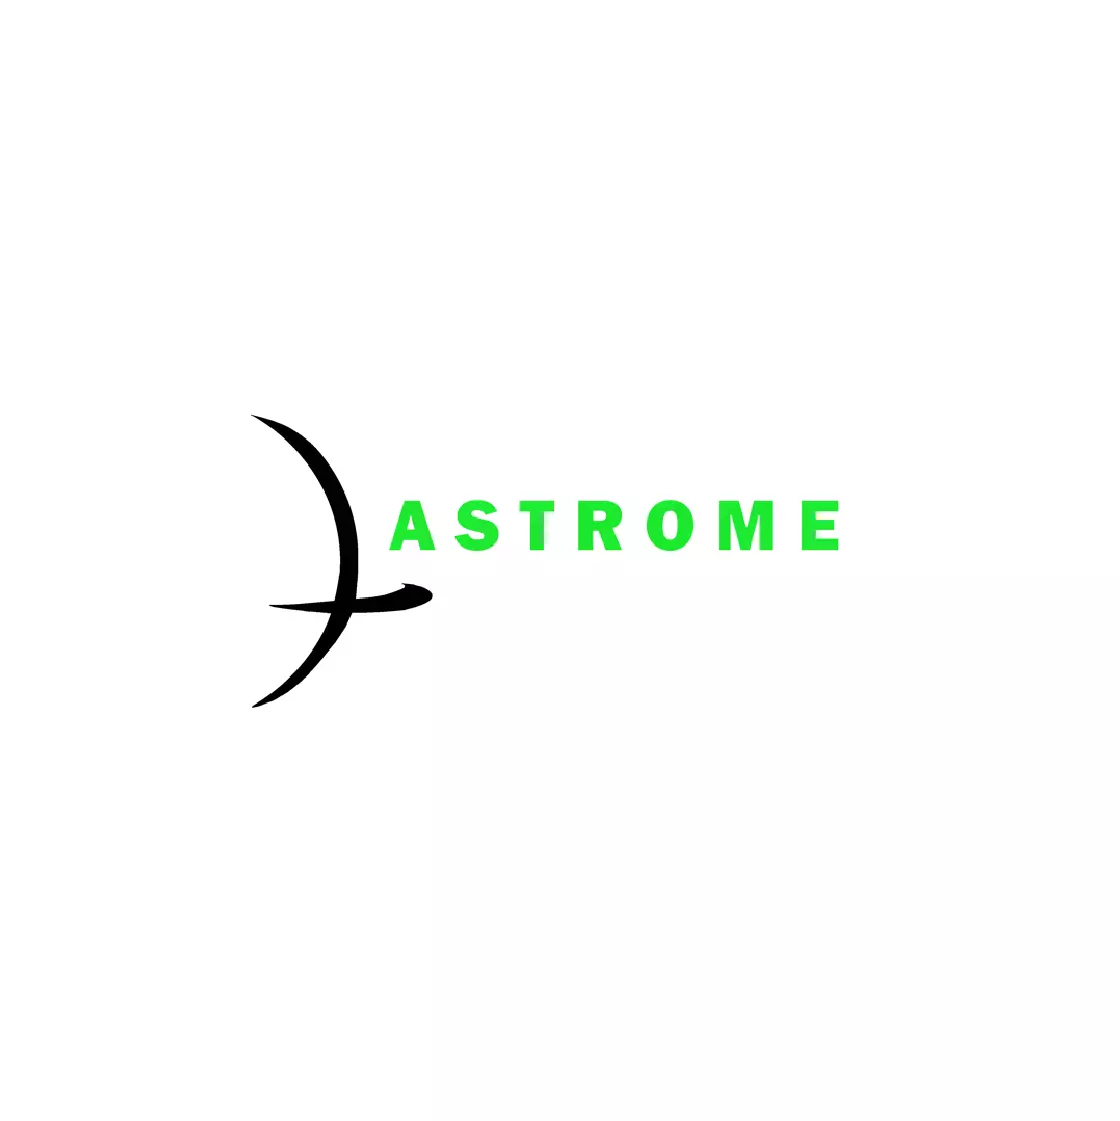 Astrome